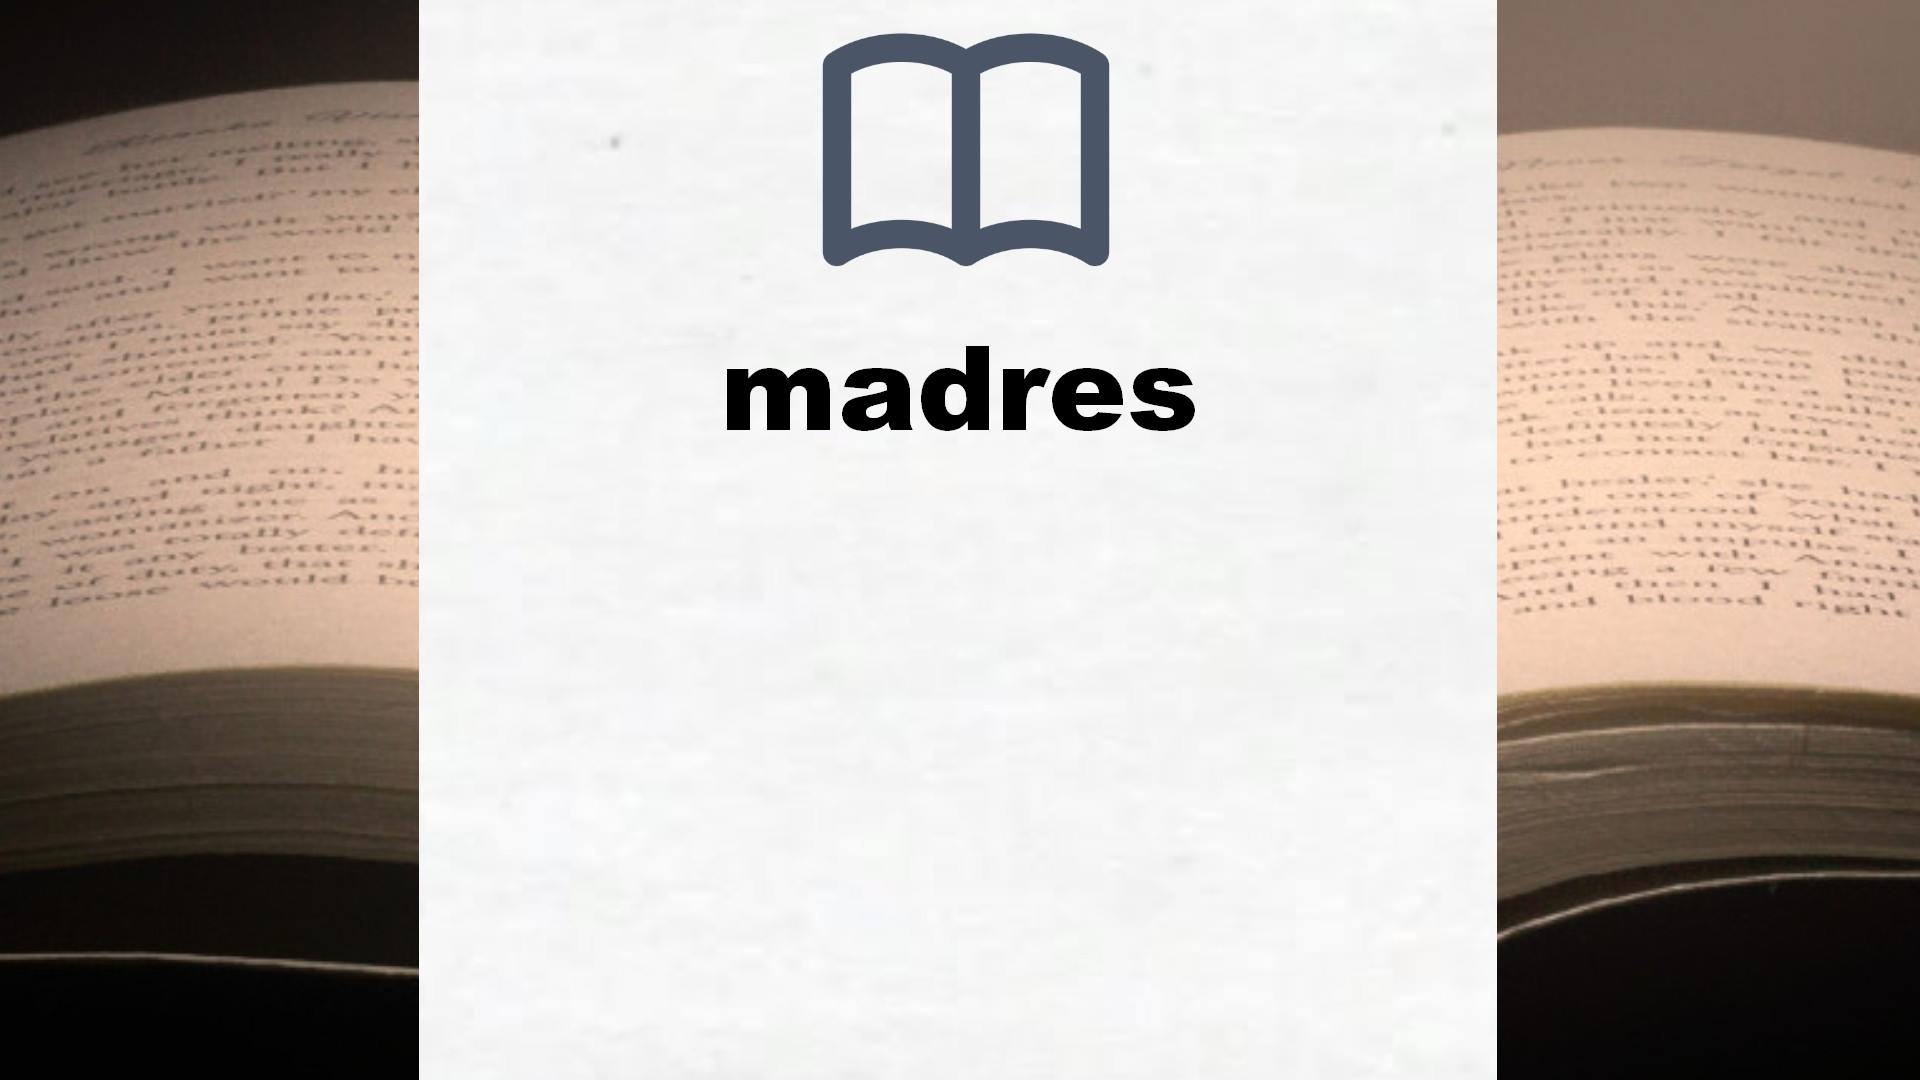 Libros sobre madres